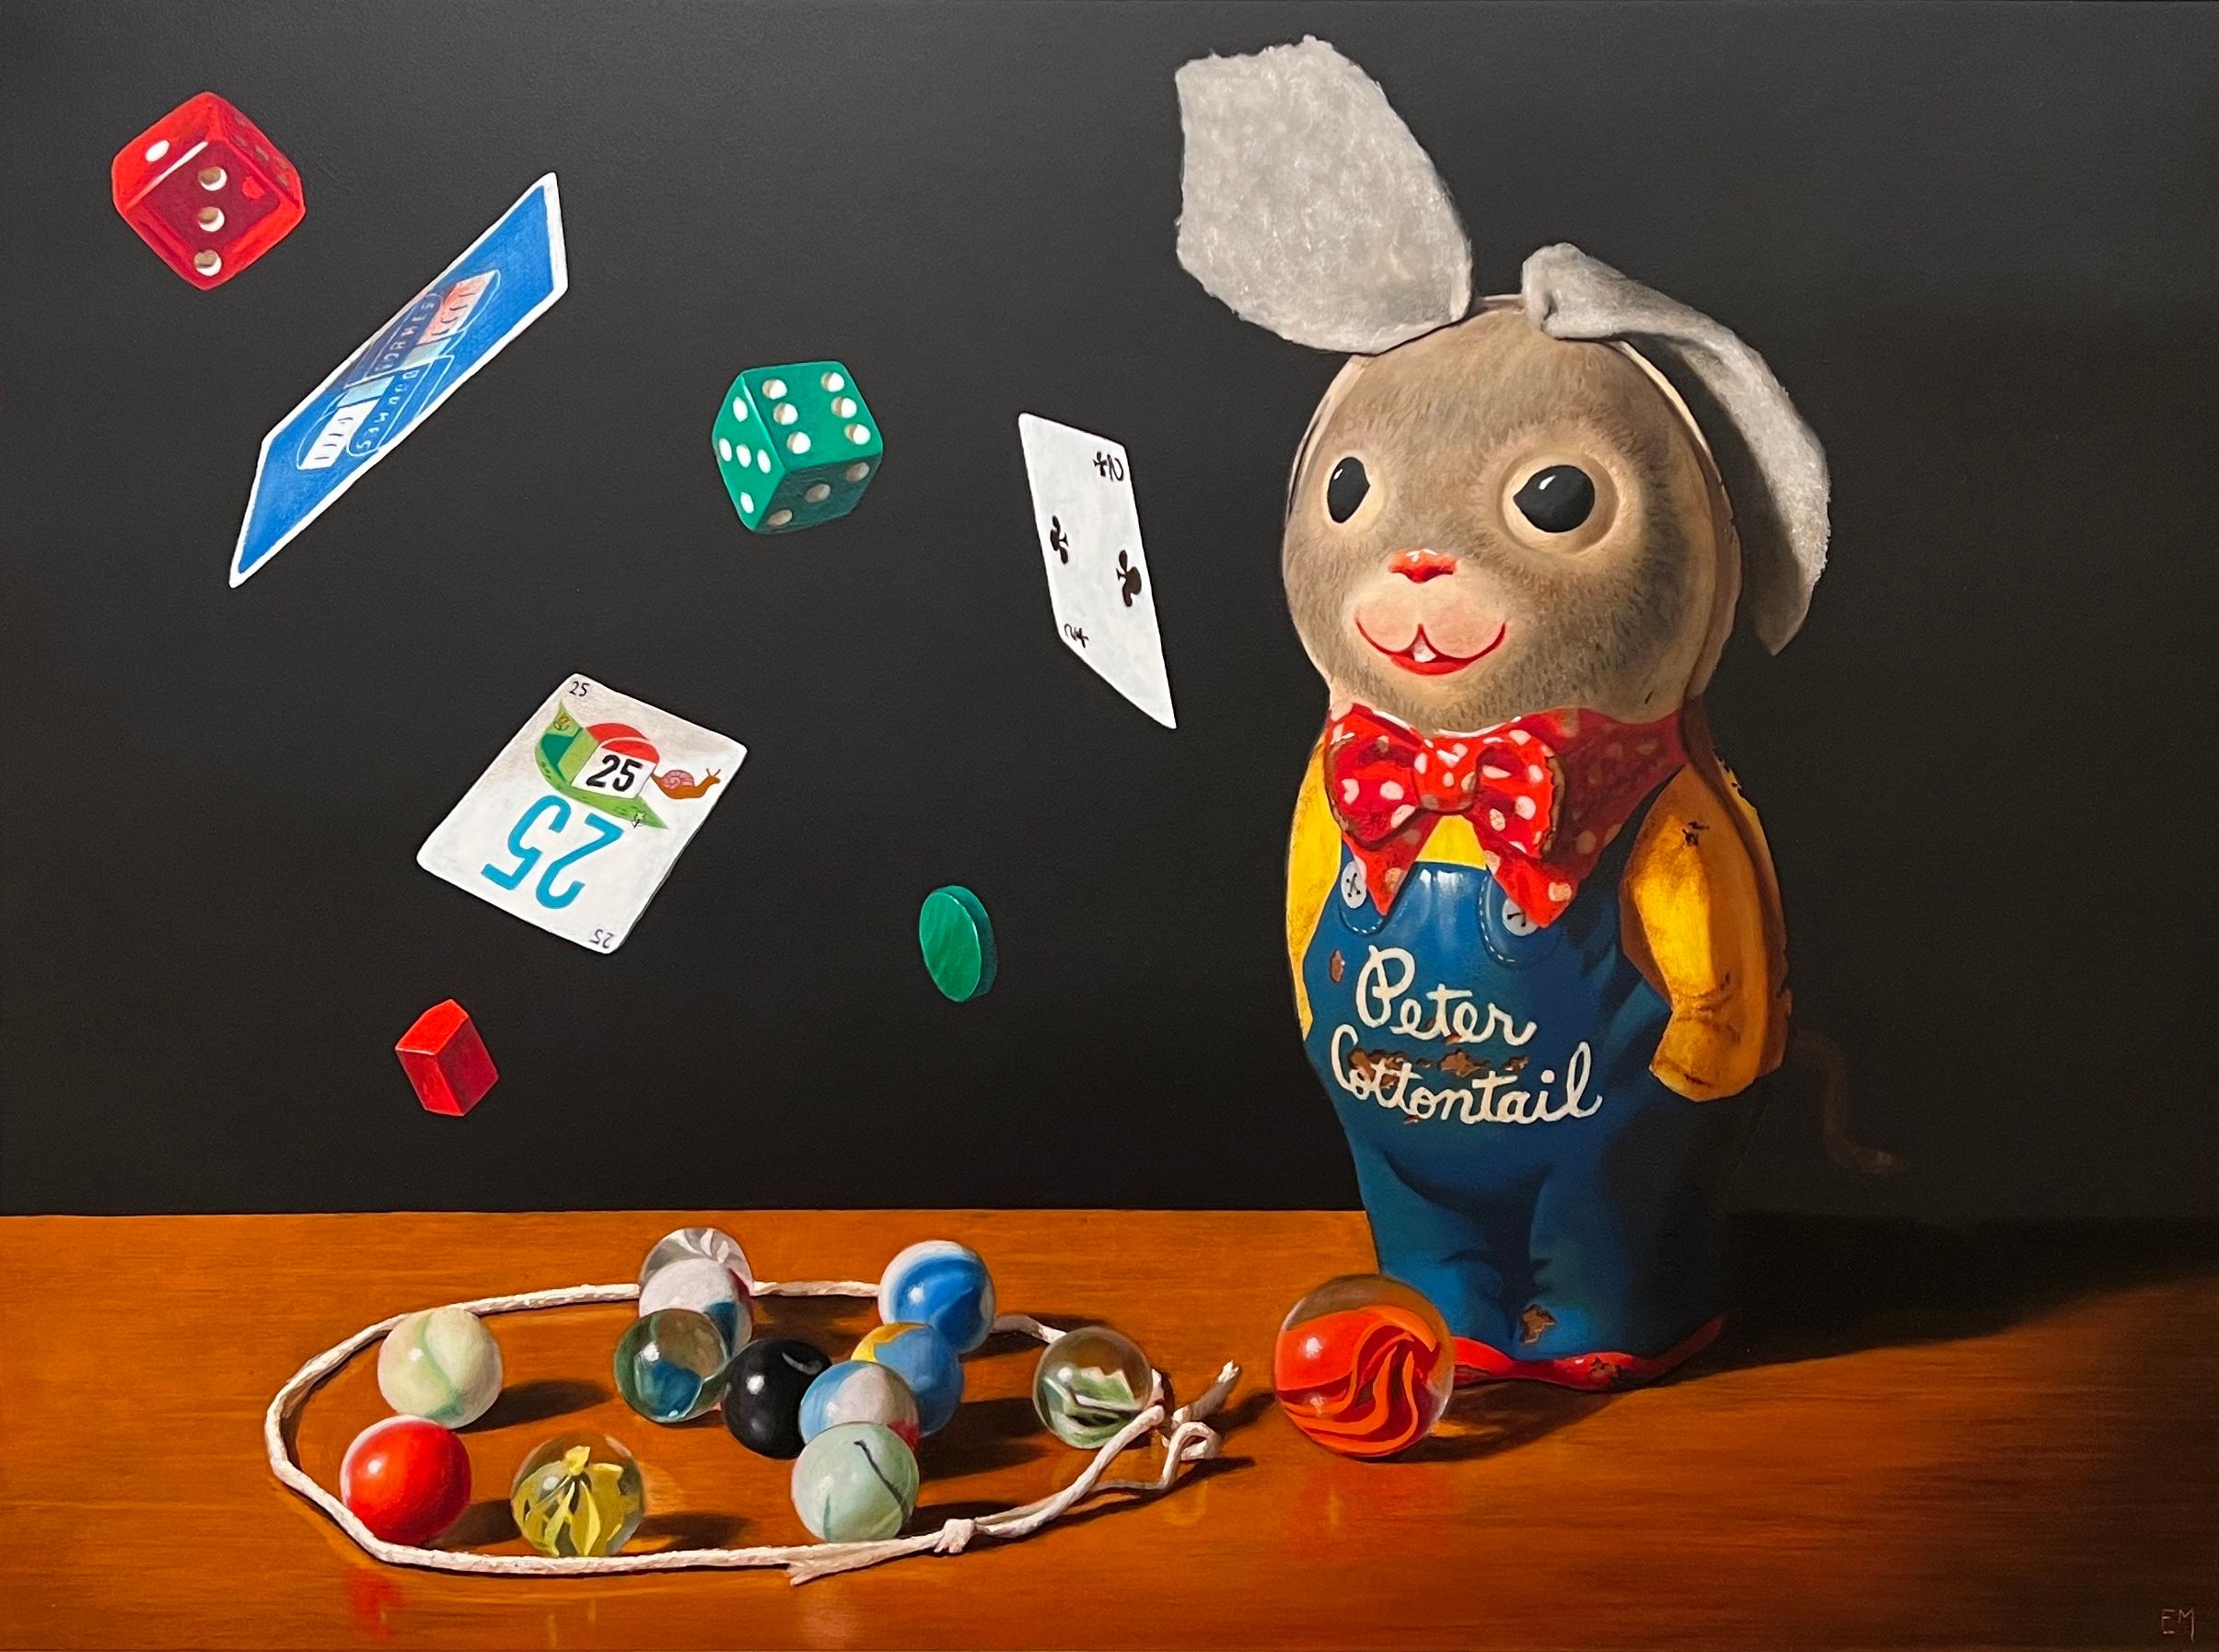 Still-Life Painting Elizabeth McGhee - PLAY, BOY BUNNY - Réalisme contemporain / Nature morte humoristique 